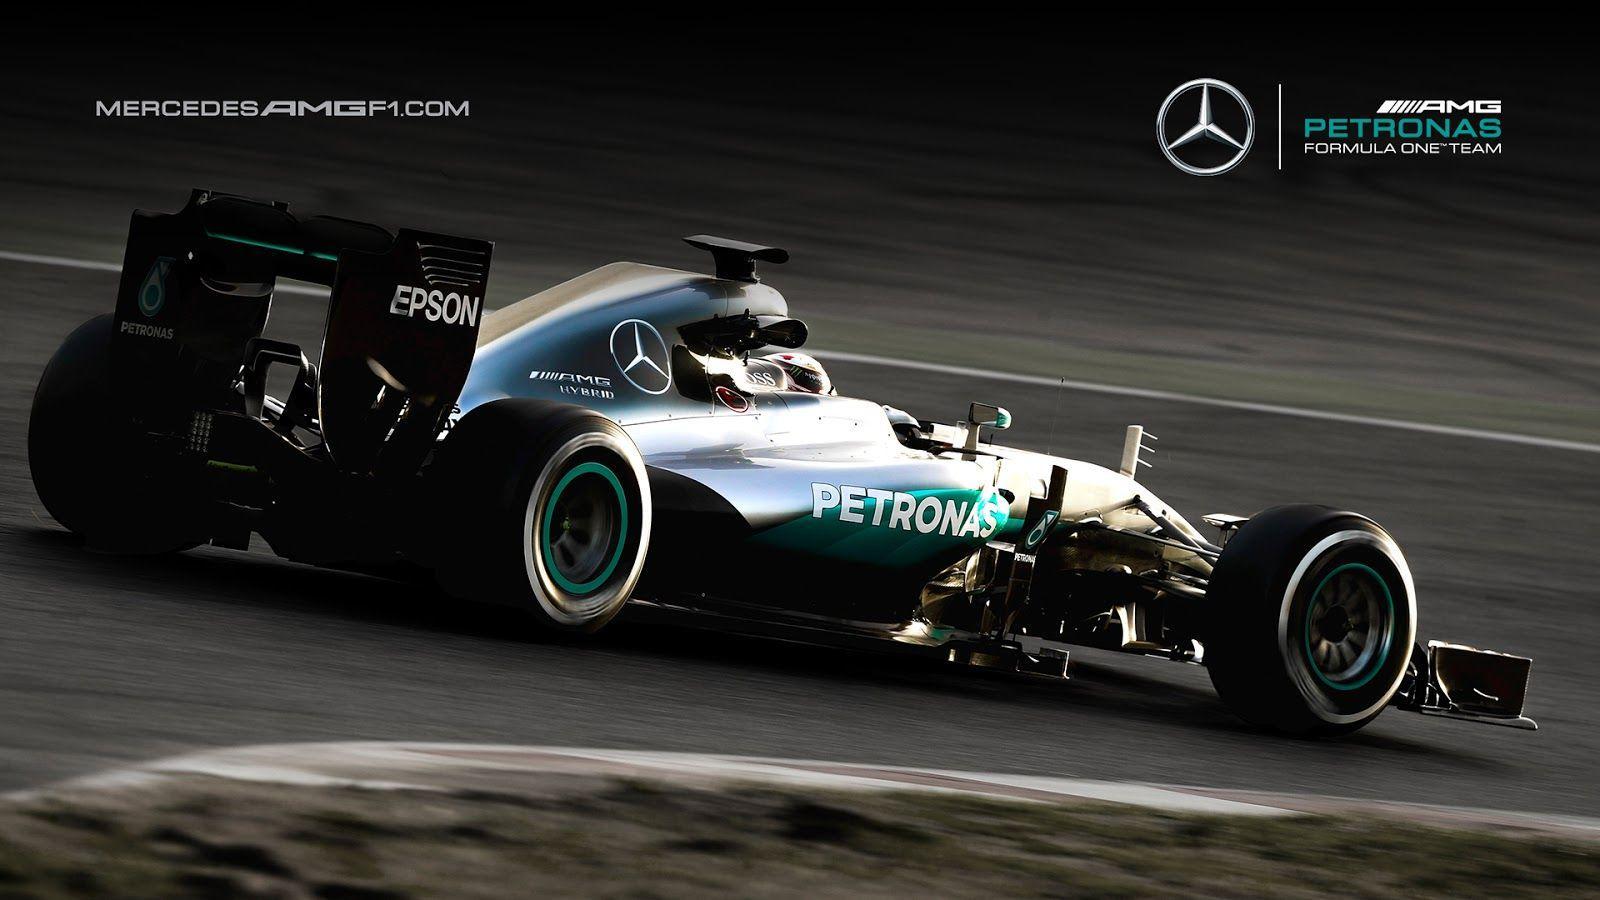 Mercedes AMG Petronas W07 2016 F1 Wallpaper